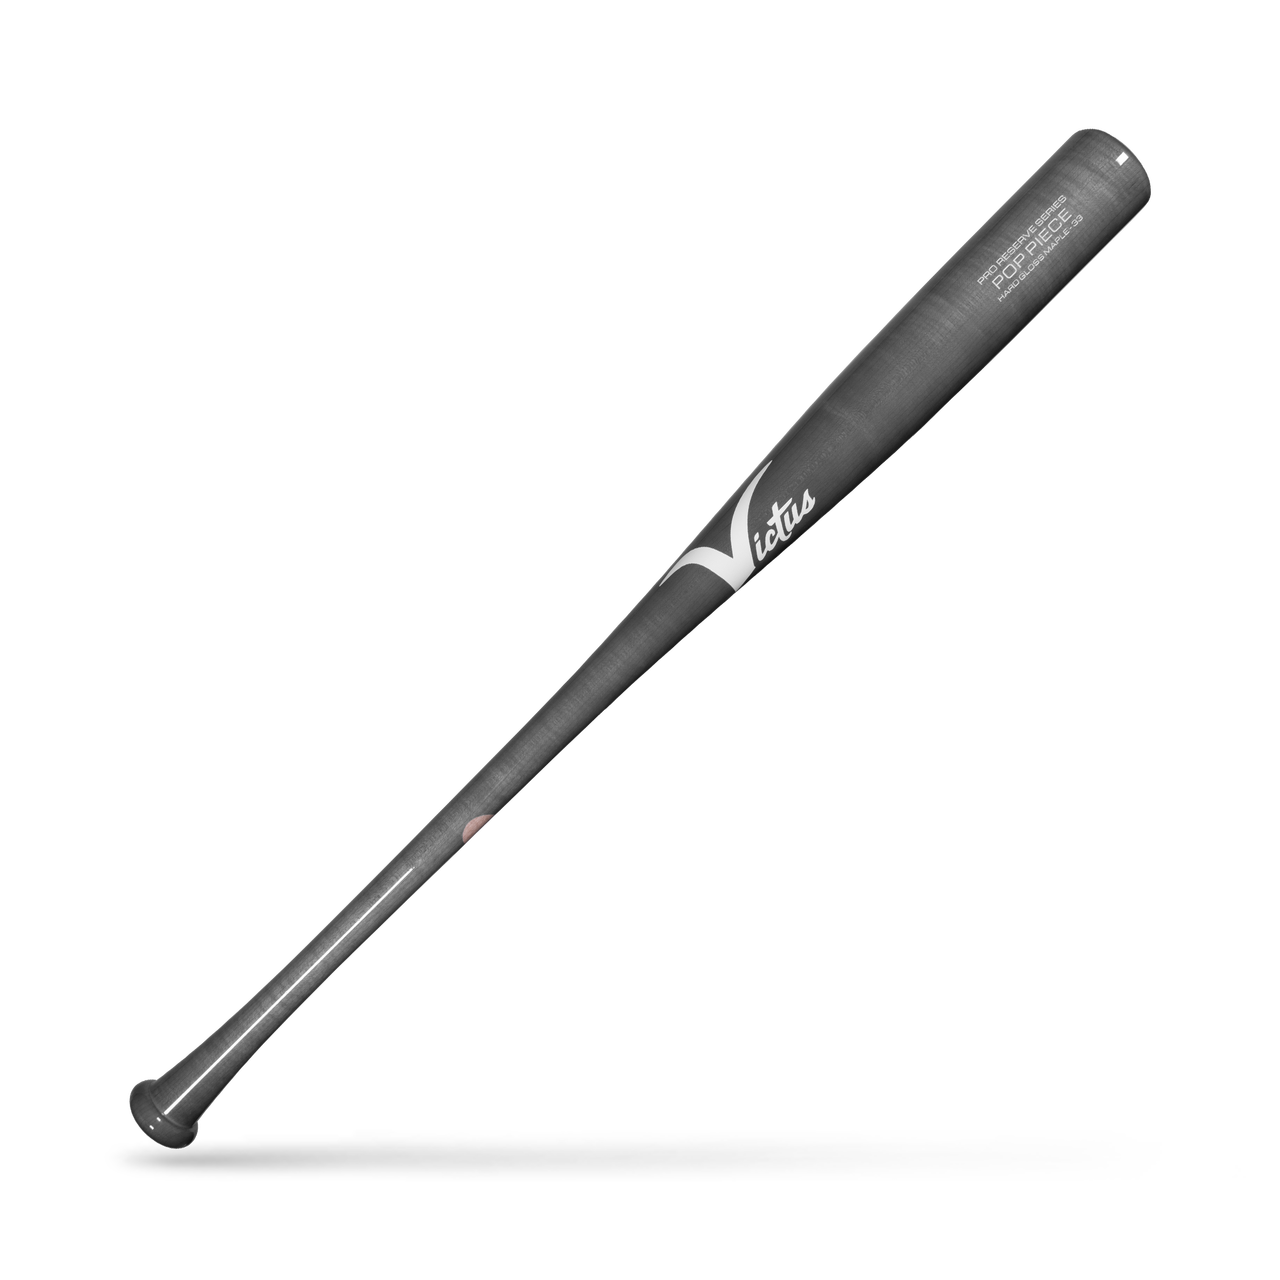 victus-pop-piece-gray-maple-pro-reserve-wood-baseball-bat-33-inch WRWMPP-GY-33 Victus   POP PIECE PRO RESERVE All Pro Reserve bats feature our